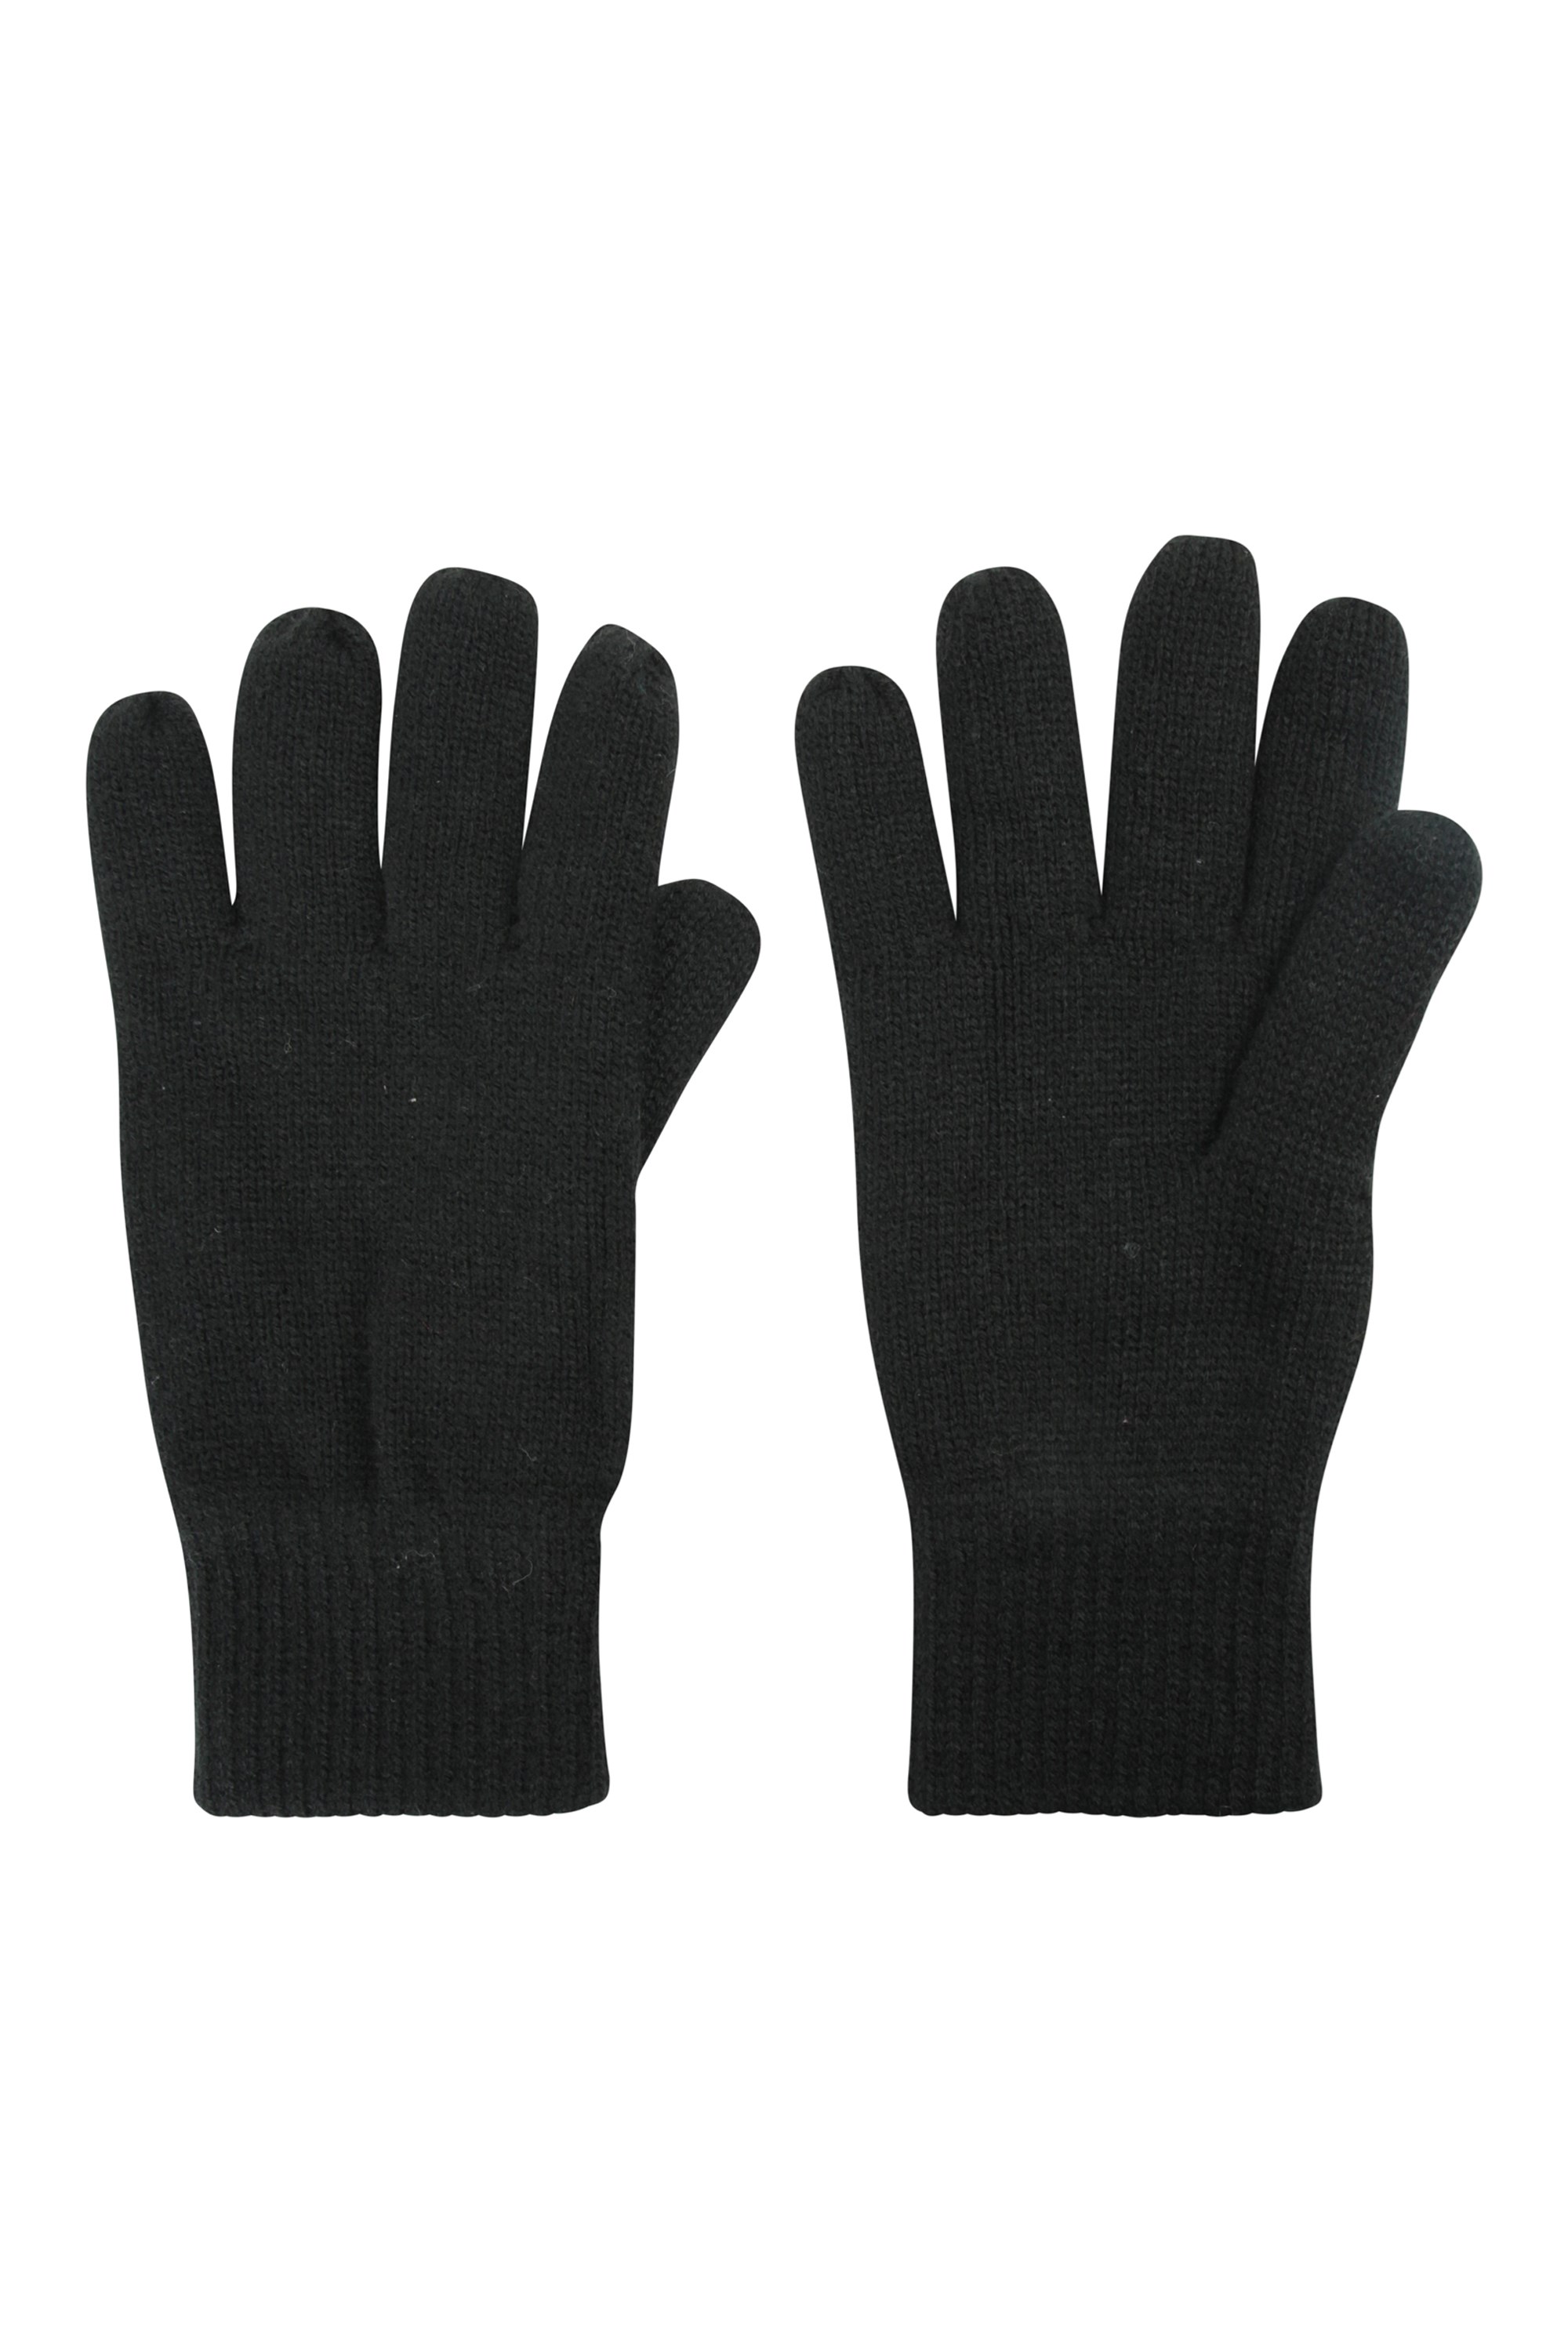 Mountain Warehouse Softshell Touchscreen Glove Fleece Water Resistant Gloves 